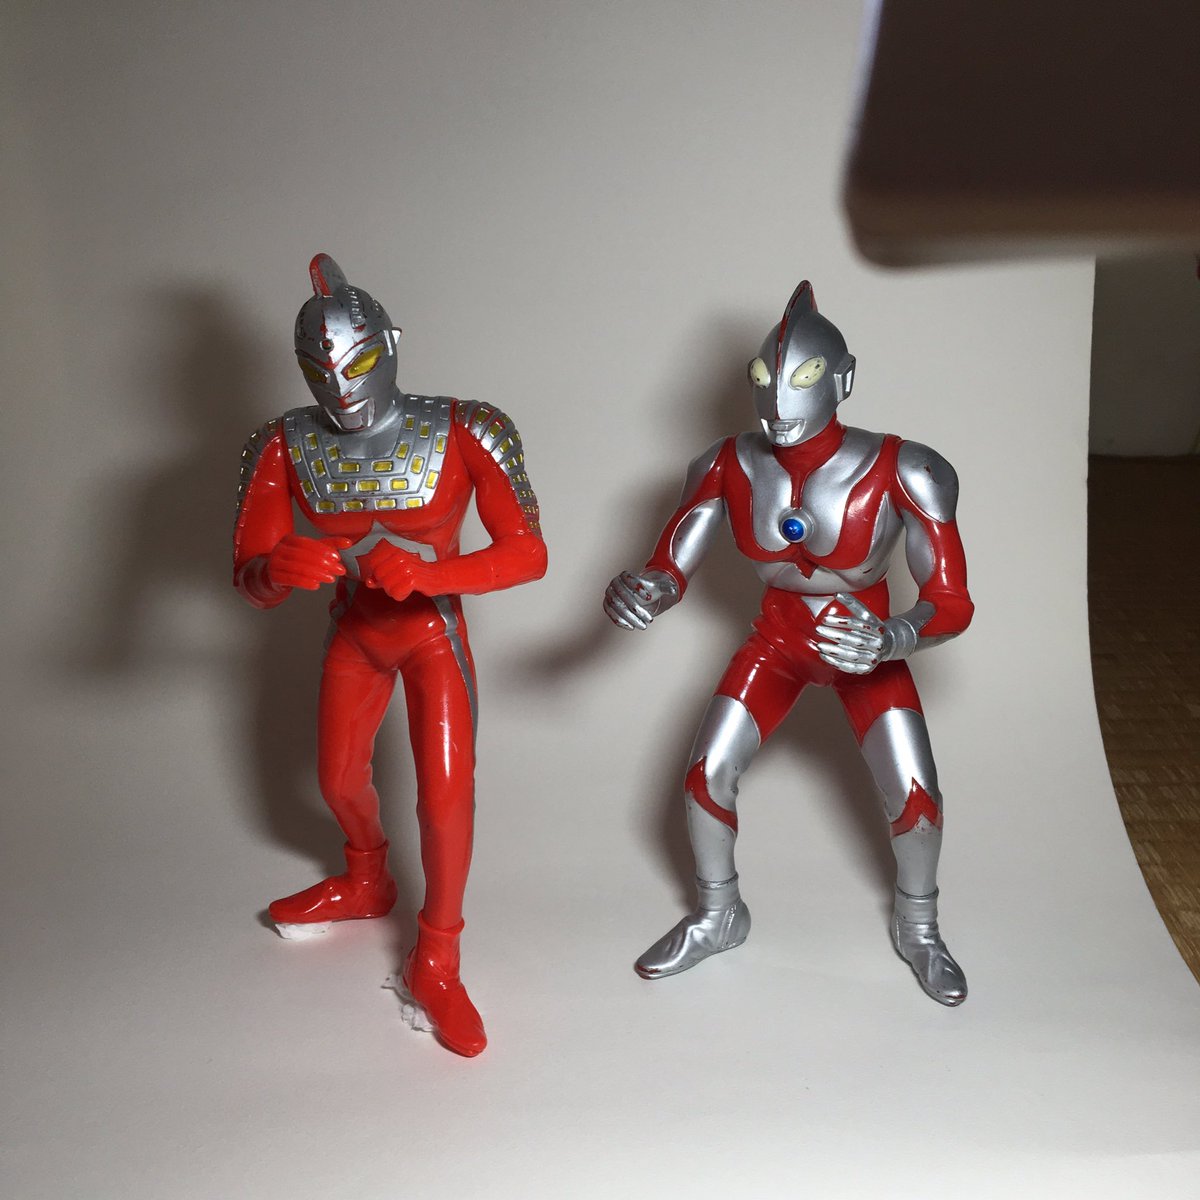 Ultraman and Ultraseven together!✨
#ultraman #ultraseven #tokusatsufans #tokusatsufan #tokusatsu #tsuburaya #sofubi #bandai #ultrasofubi66 
#ウルトラマン #ウルトラセブン #特撮 #円谷プロ #ソフビ #バンダイ